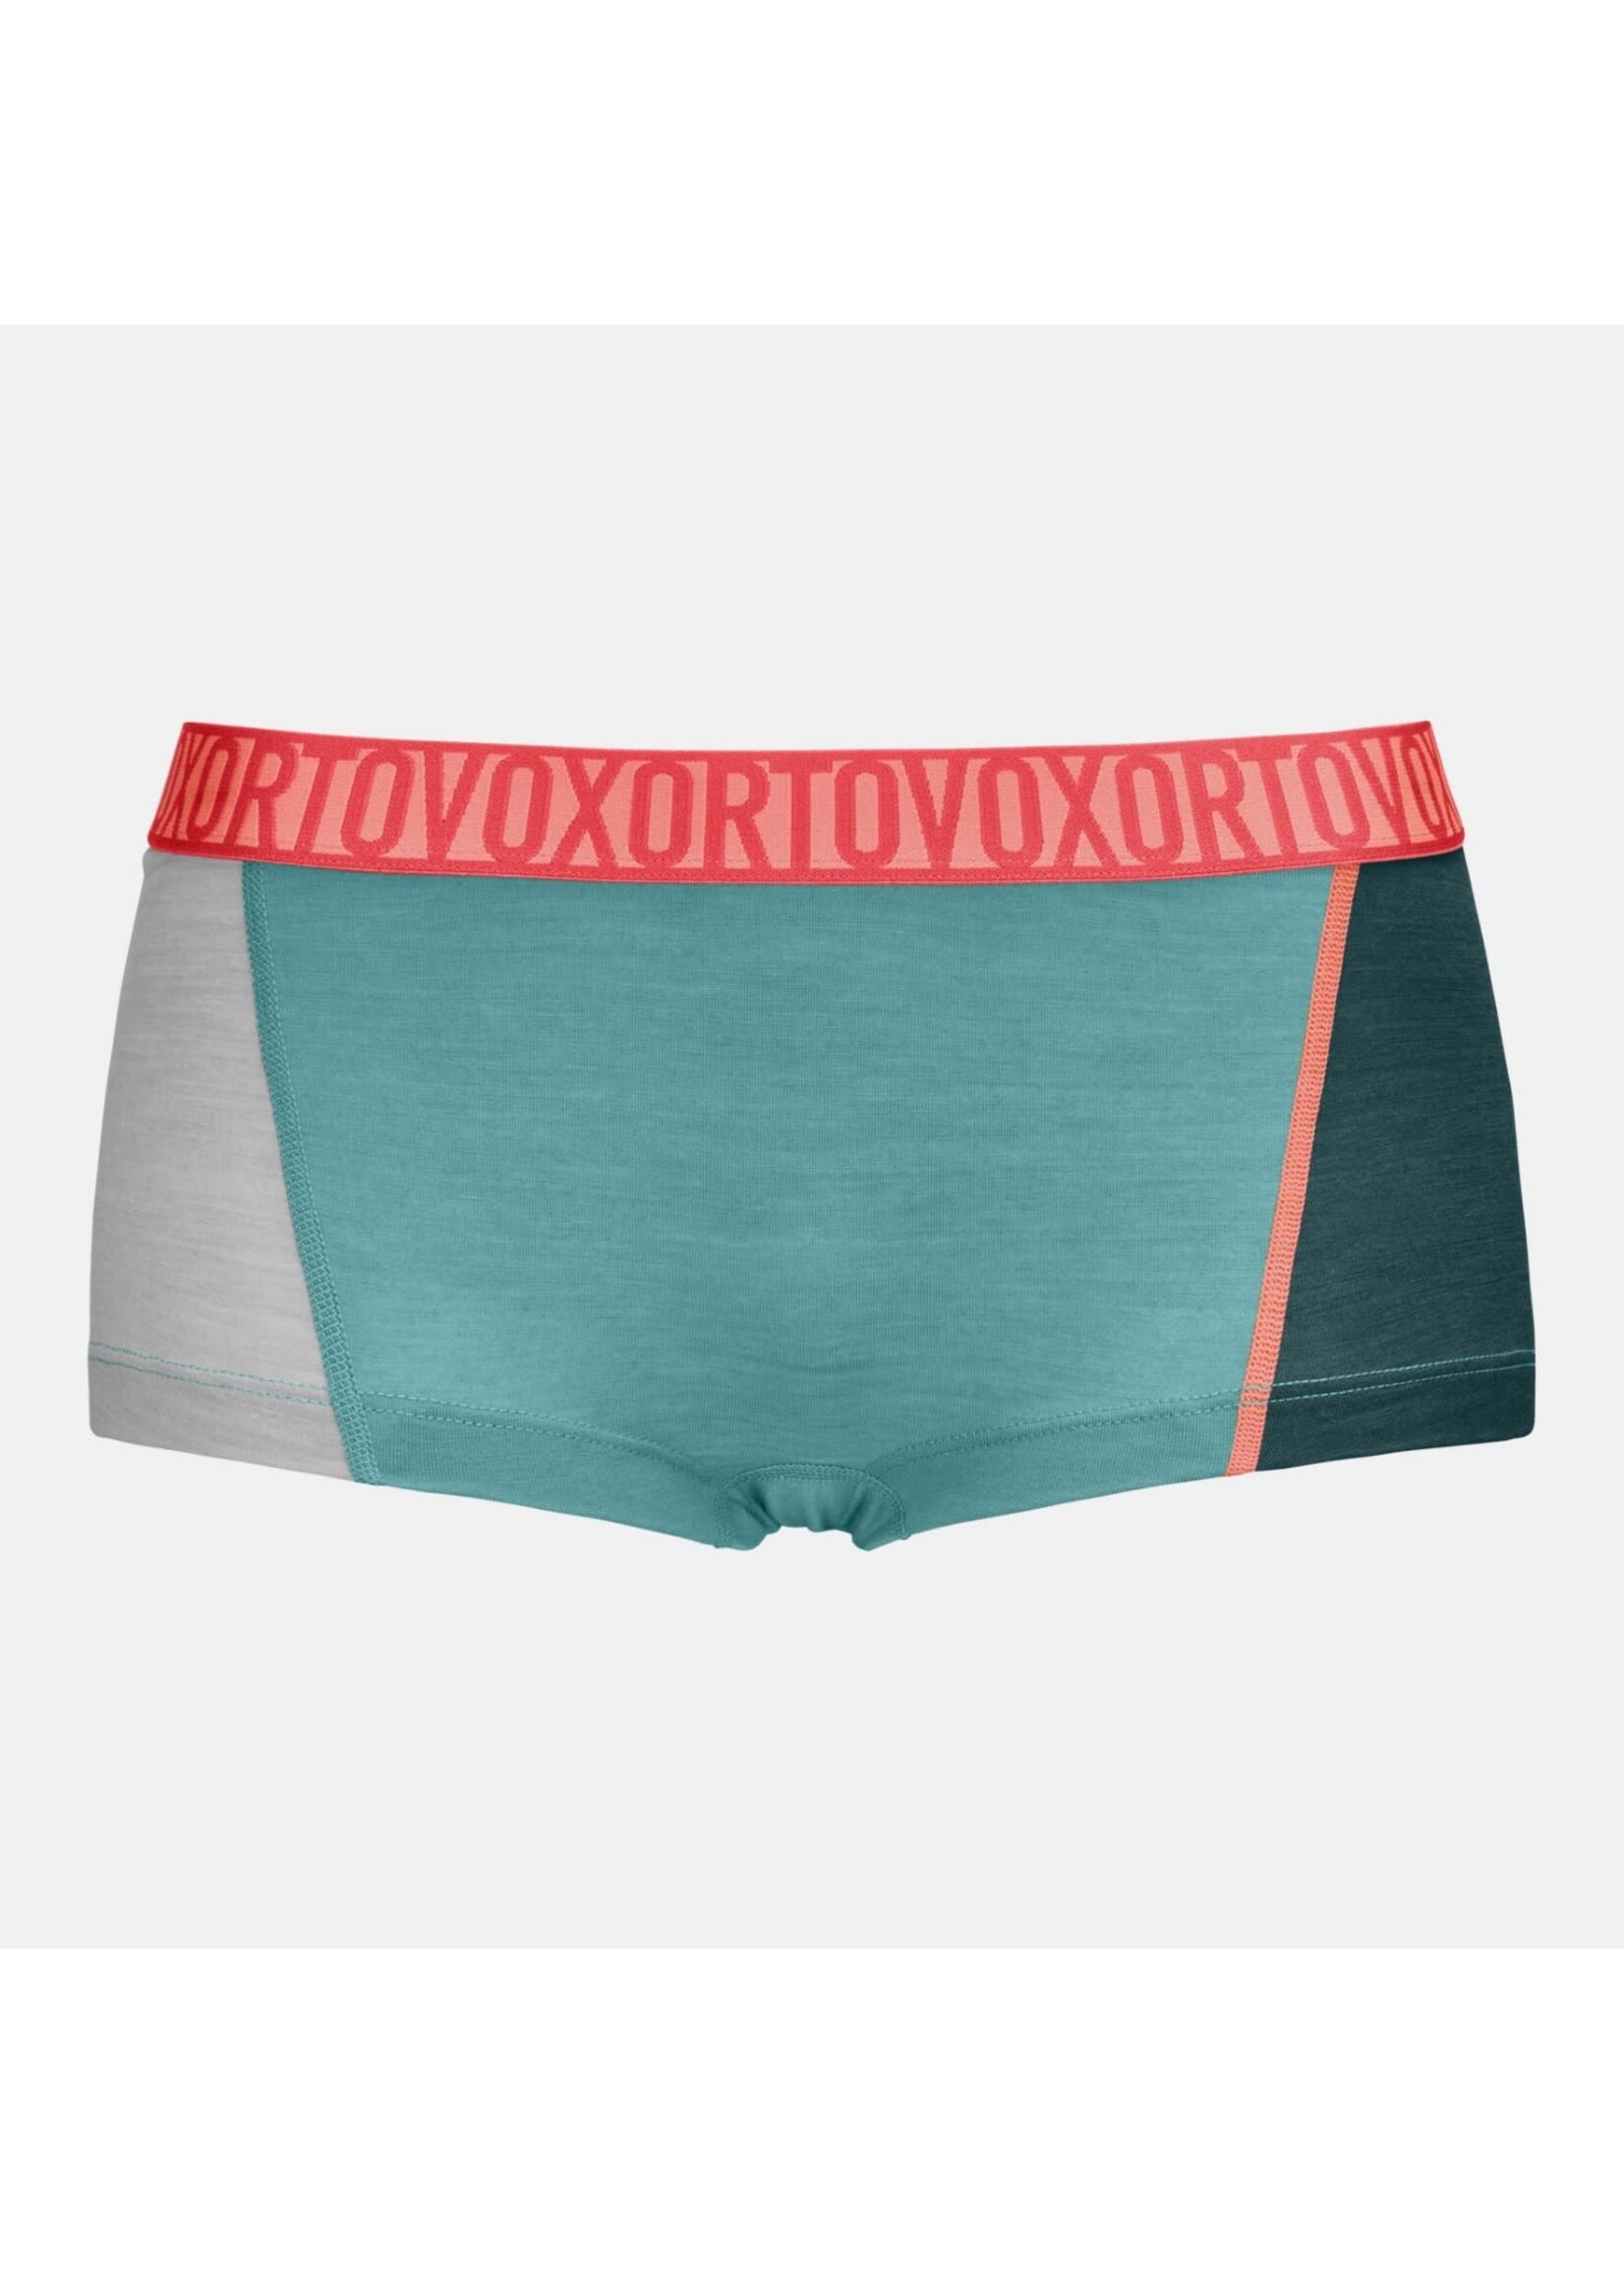 Ortovox Sous-vêtement Ortovox 150 Essential Hot Pants - Femme